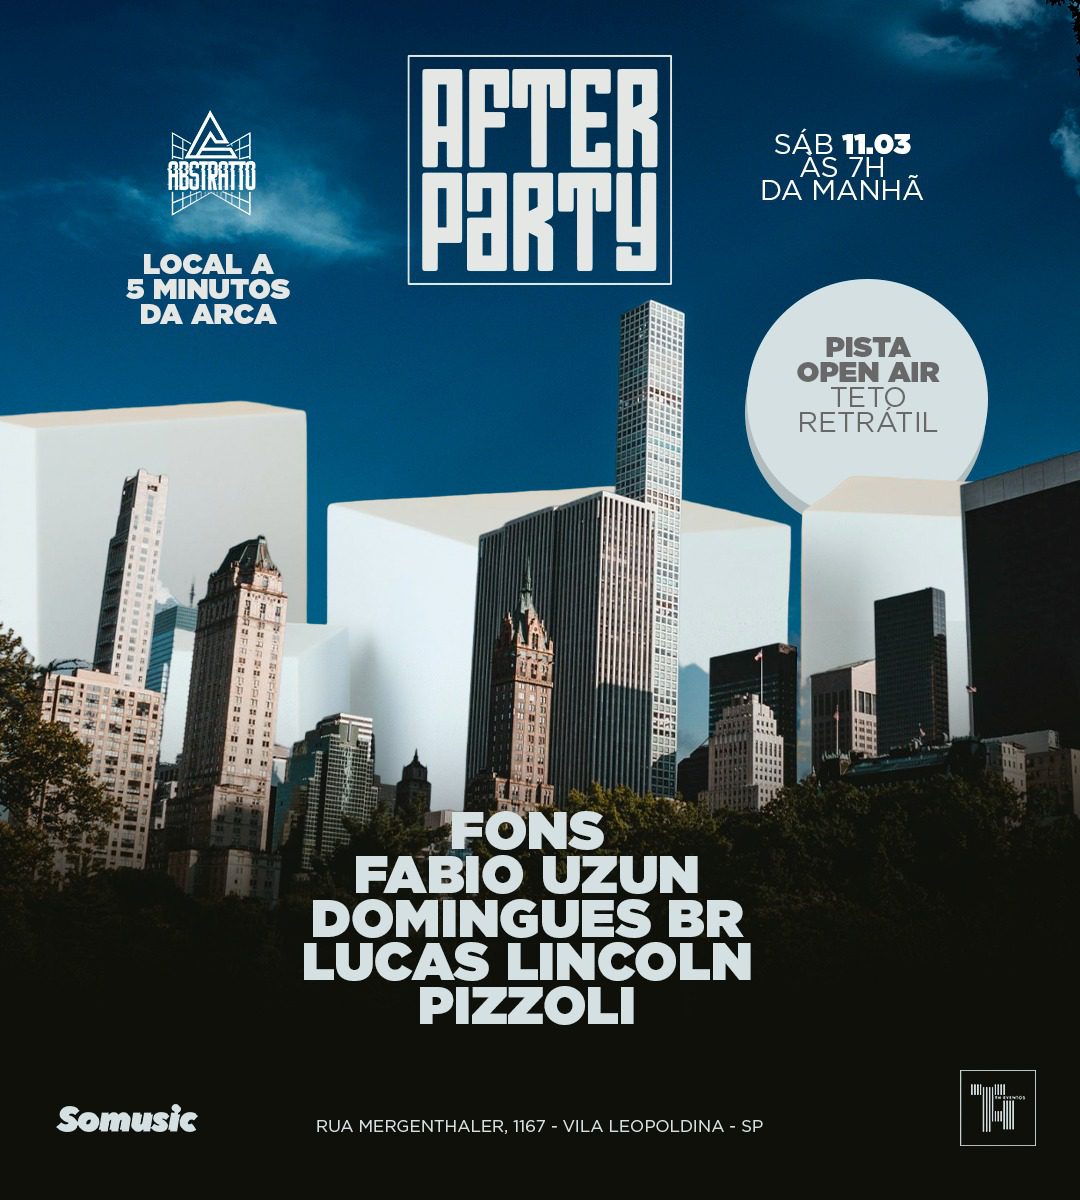 🇧🇷AFTER PARTY - SÃO PAULO no Abstratto club